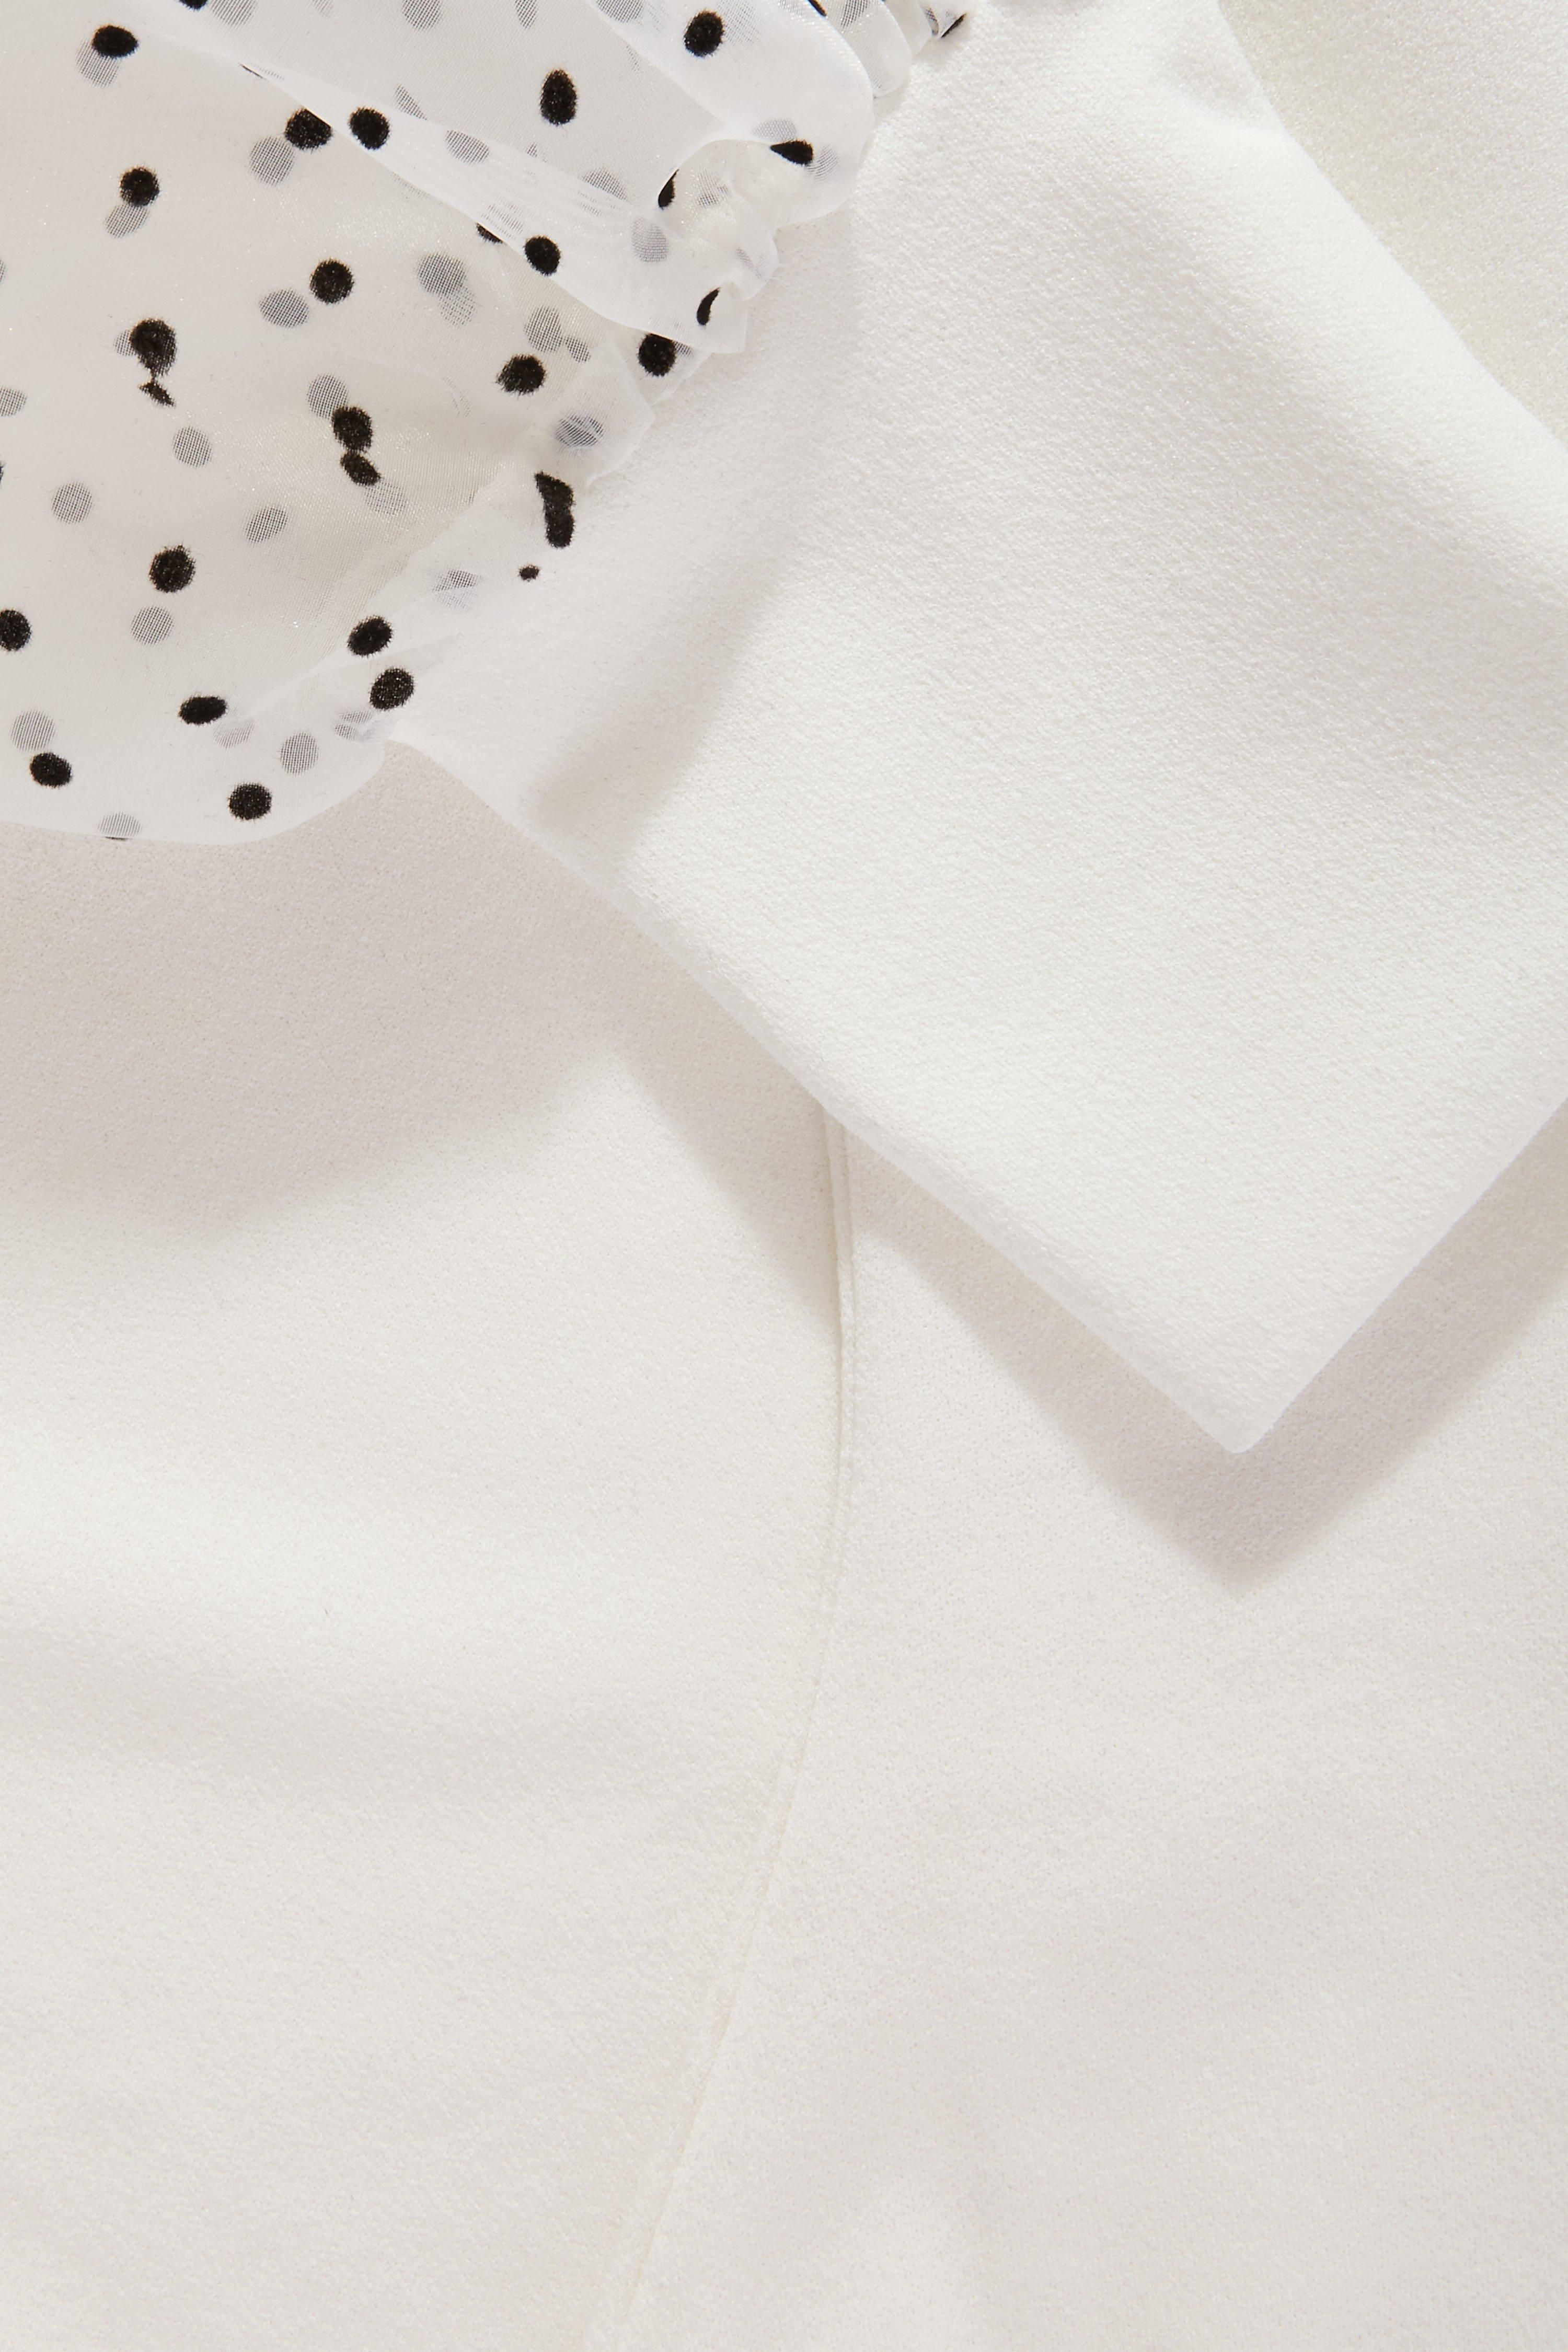 - Polka dot design  - Long mesh sleeve  - Square neck  - Length: 75cm approx  - Model height: 5' 8